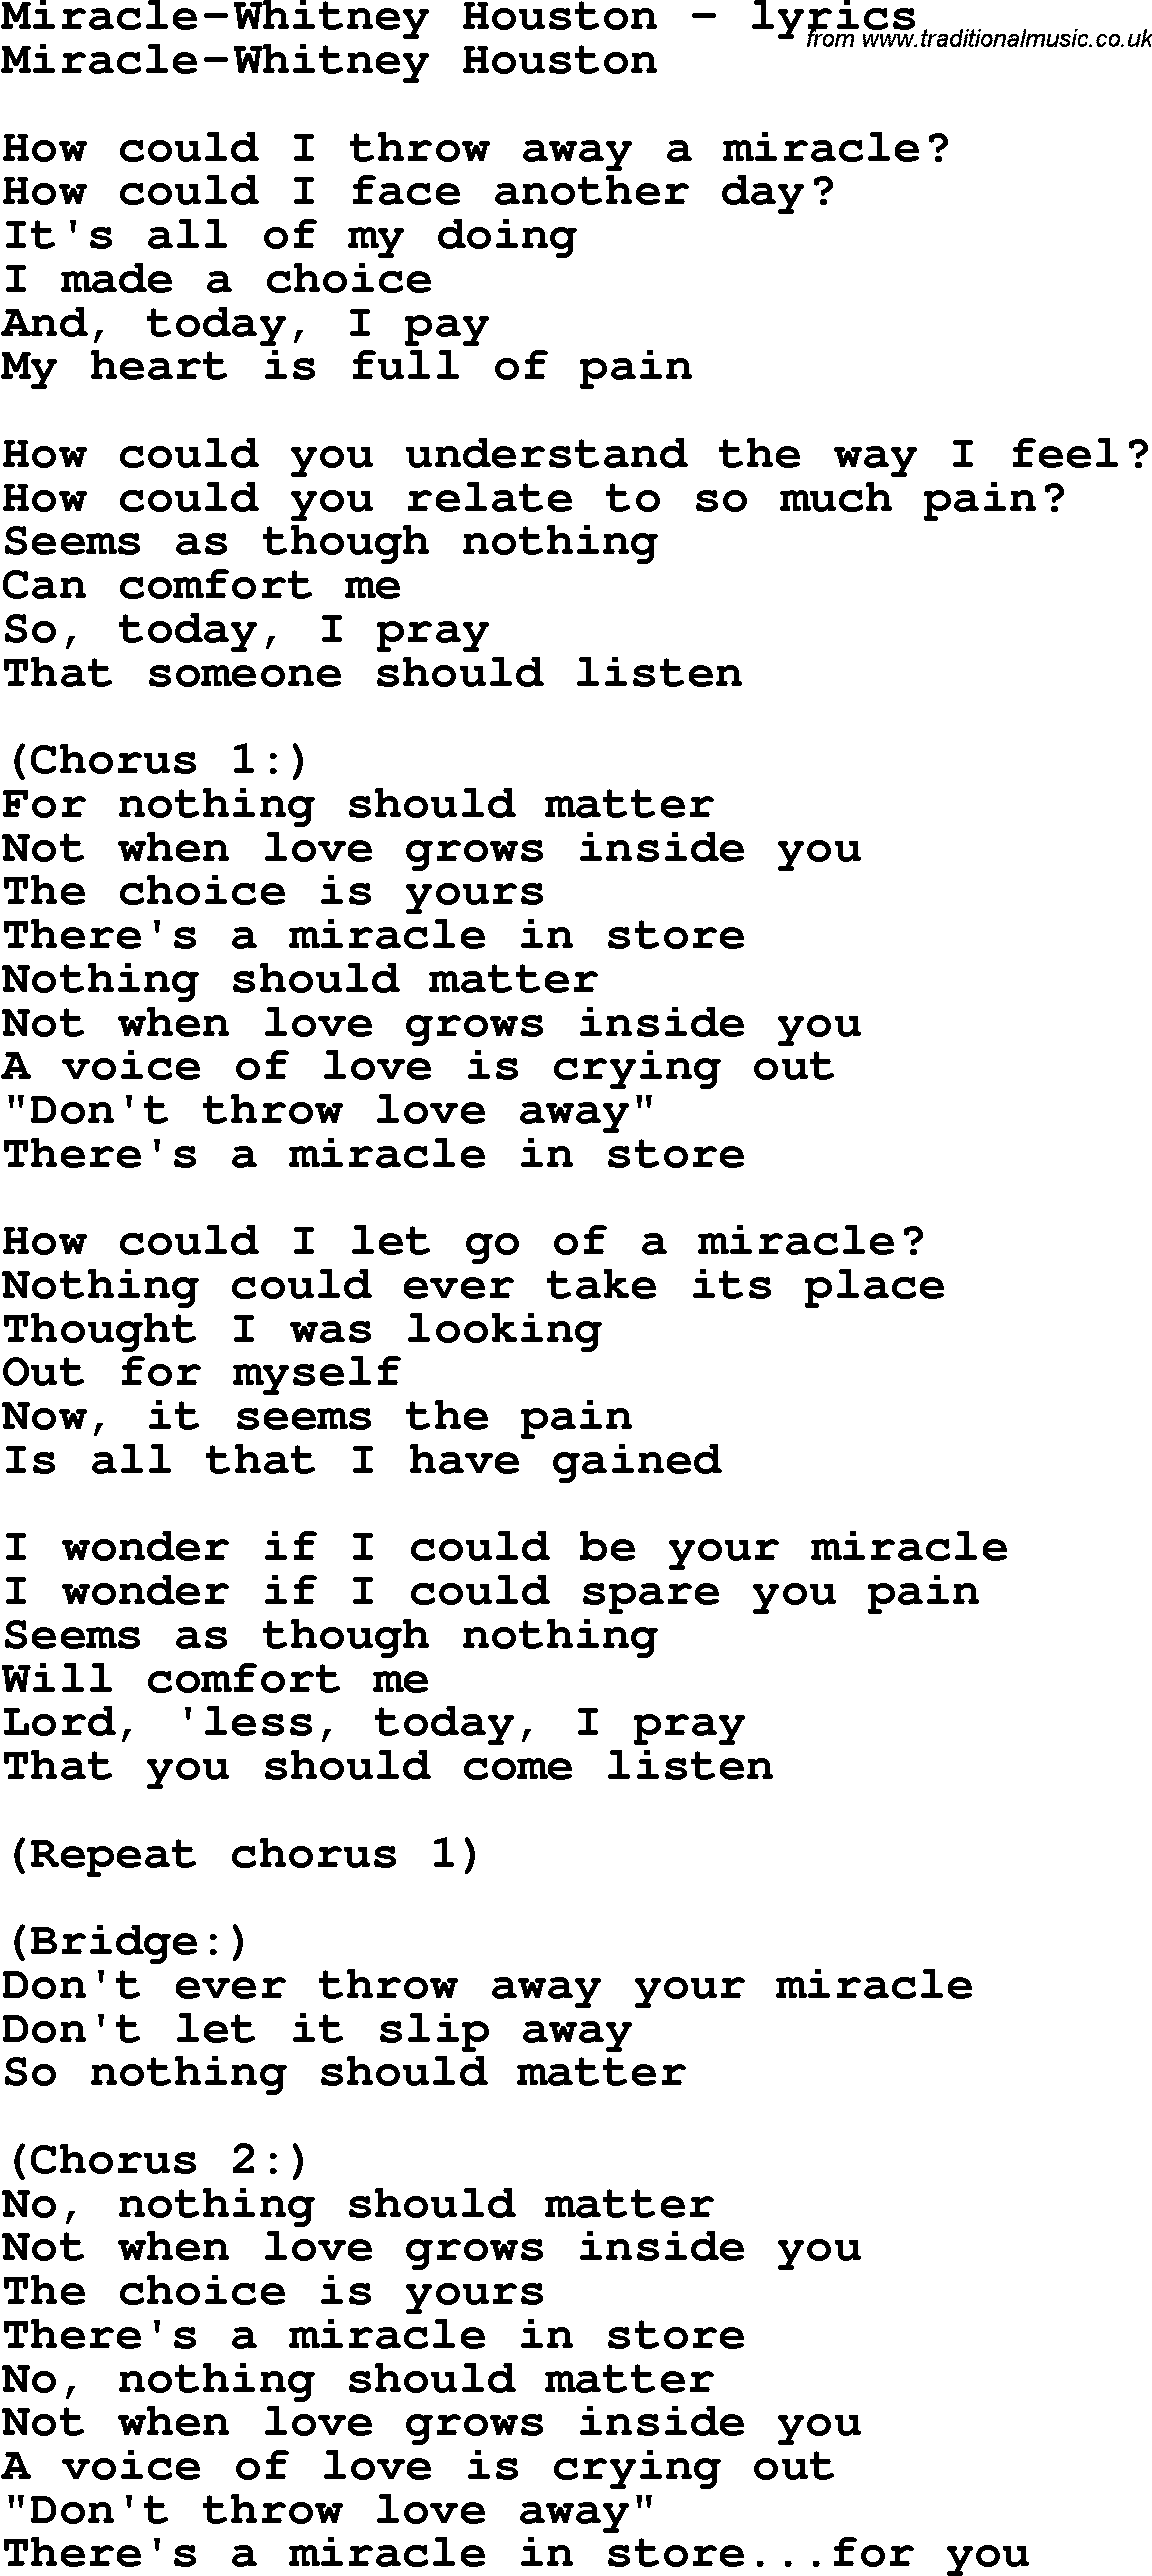 Love Song Lyrics for: Miracle-Whitney Houston